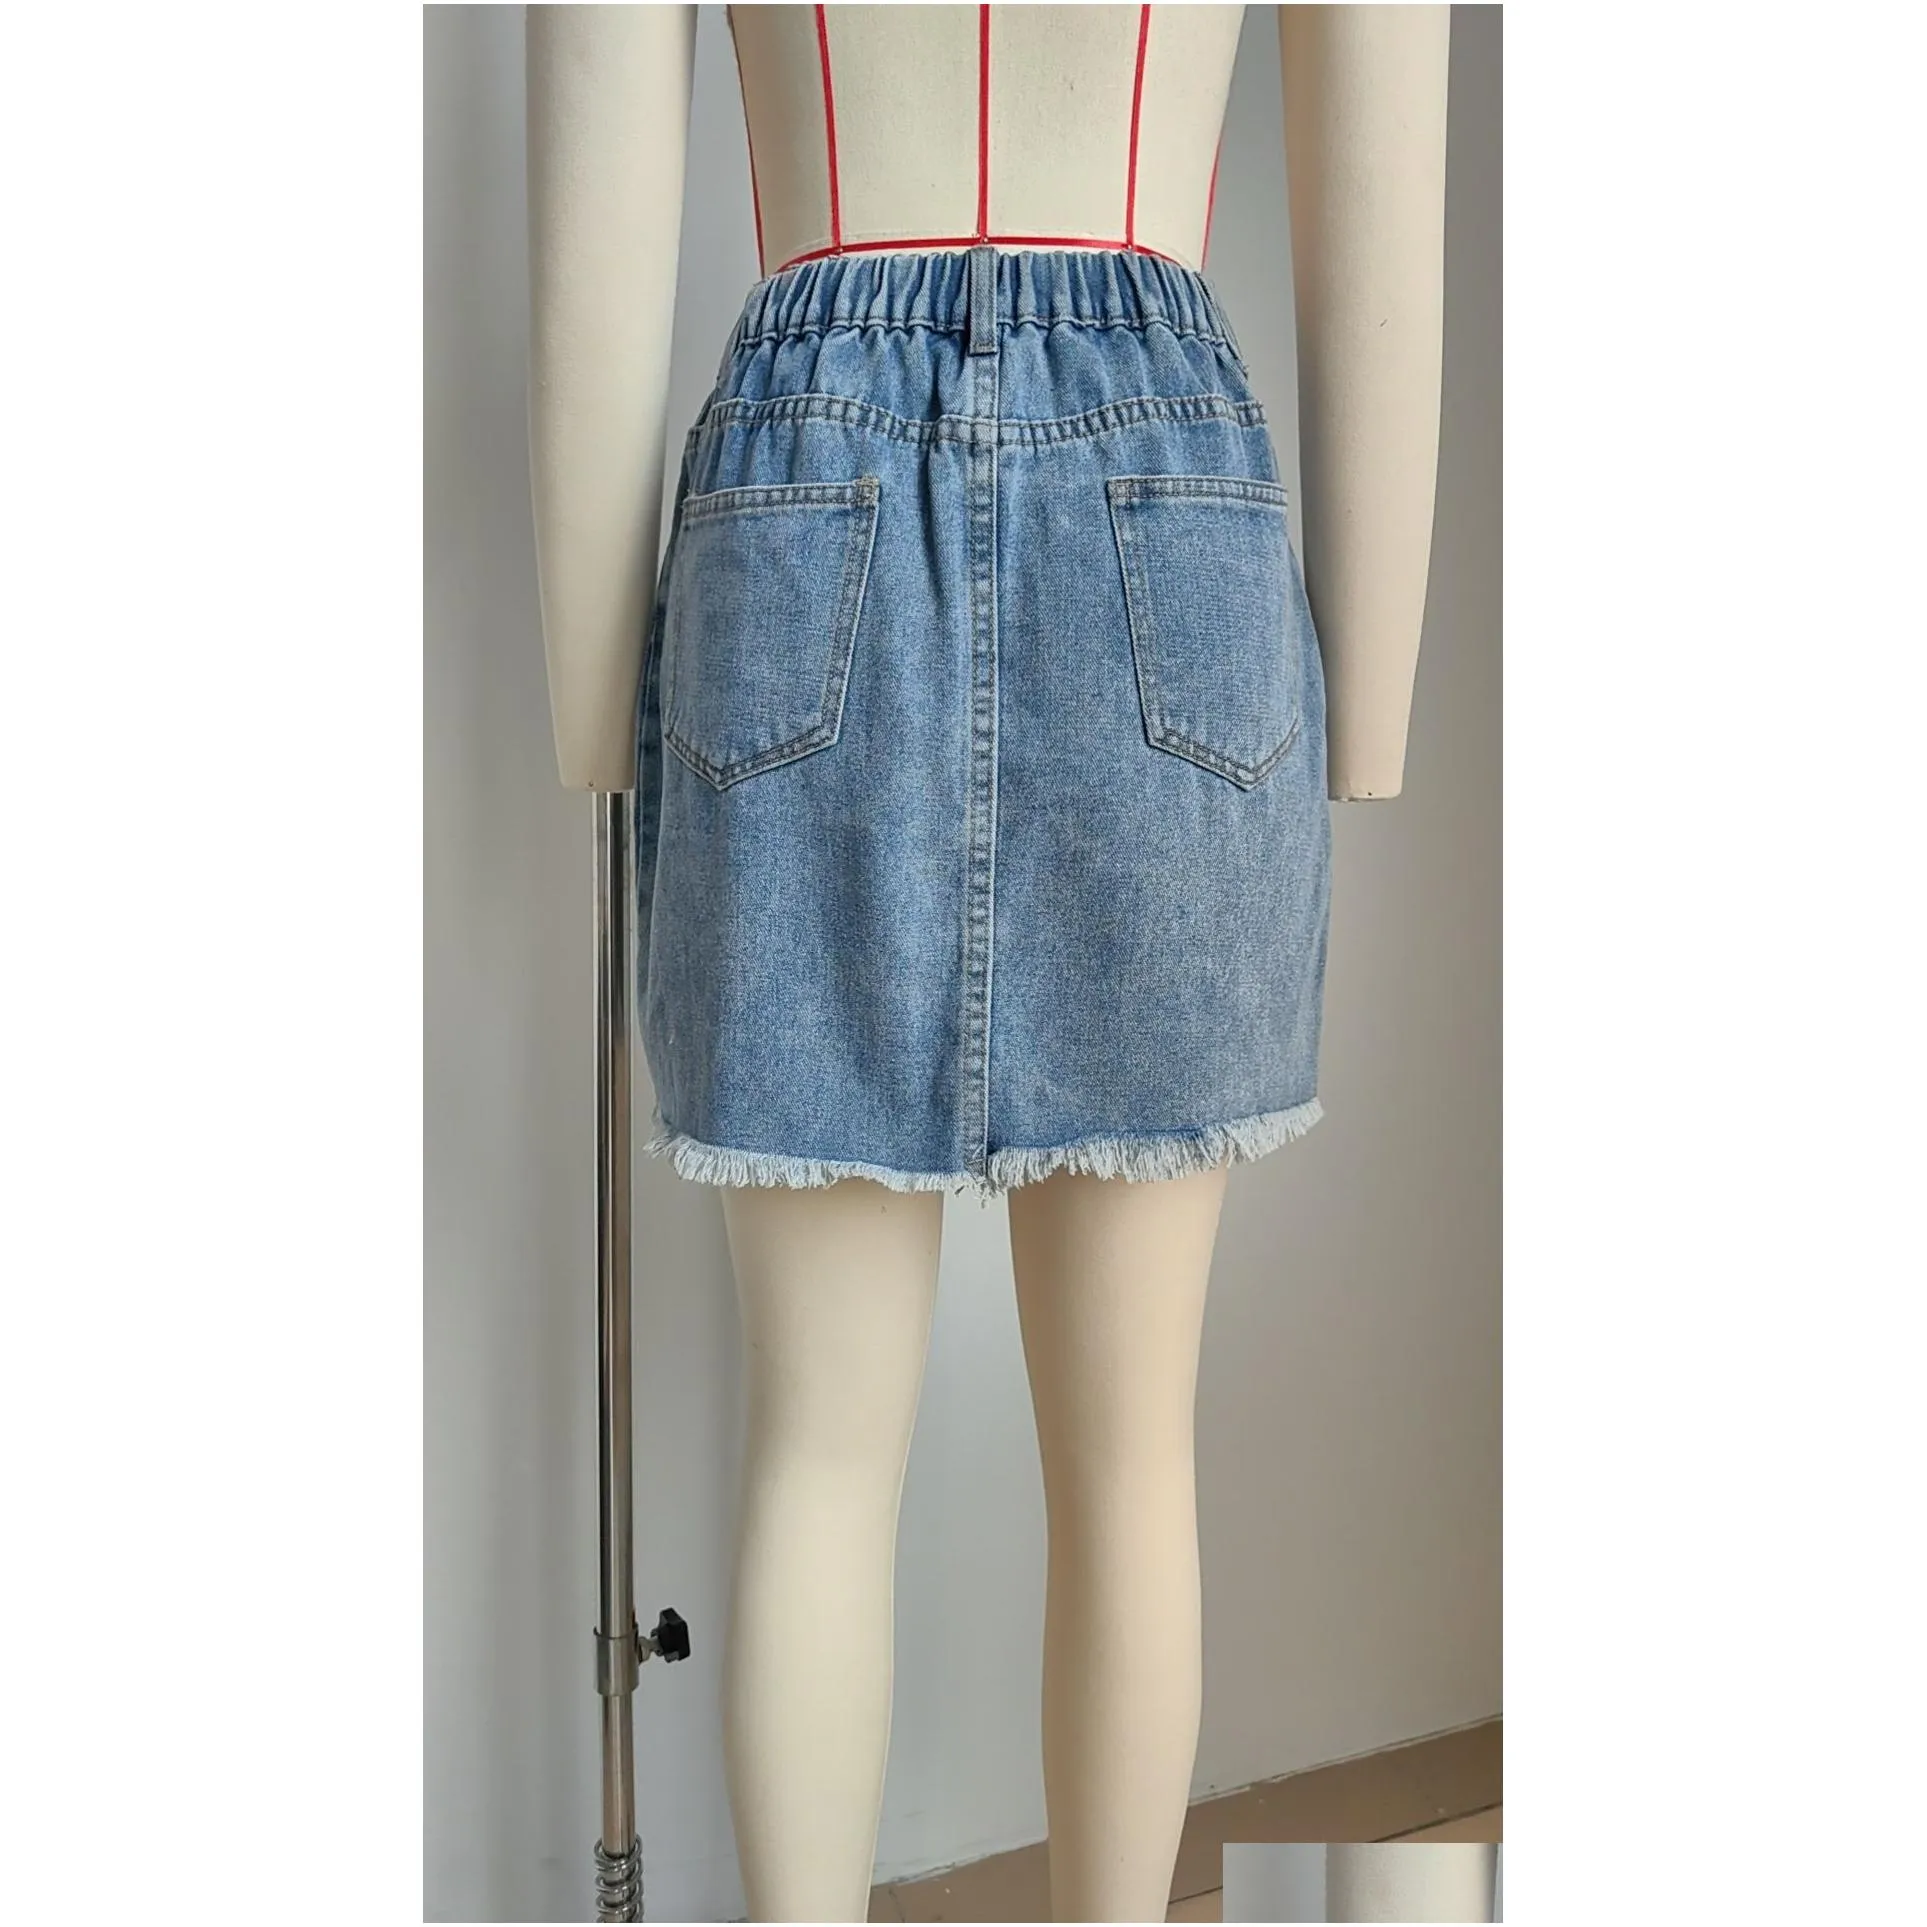 Skirts for Women Denim Mini Skirt Bodycon Trendy Summer Casual Jean Skirt Elastic Waist Plus Size S M L XL XXL